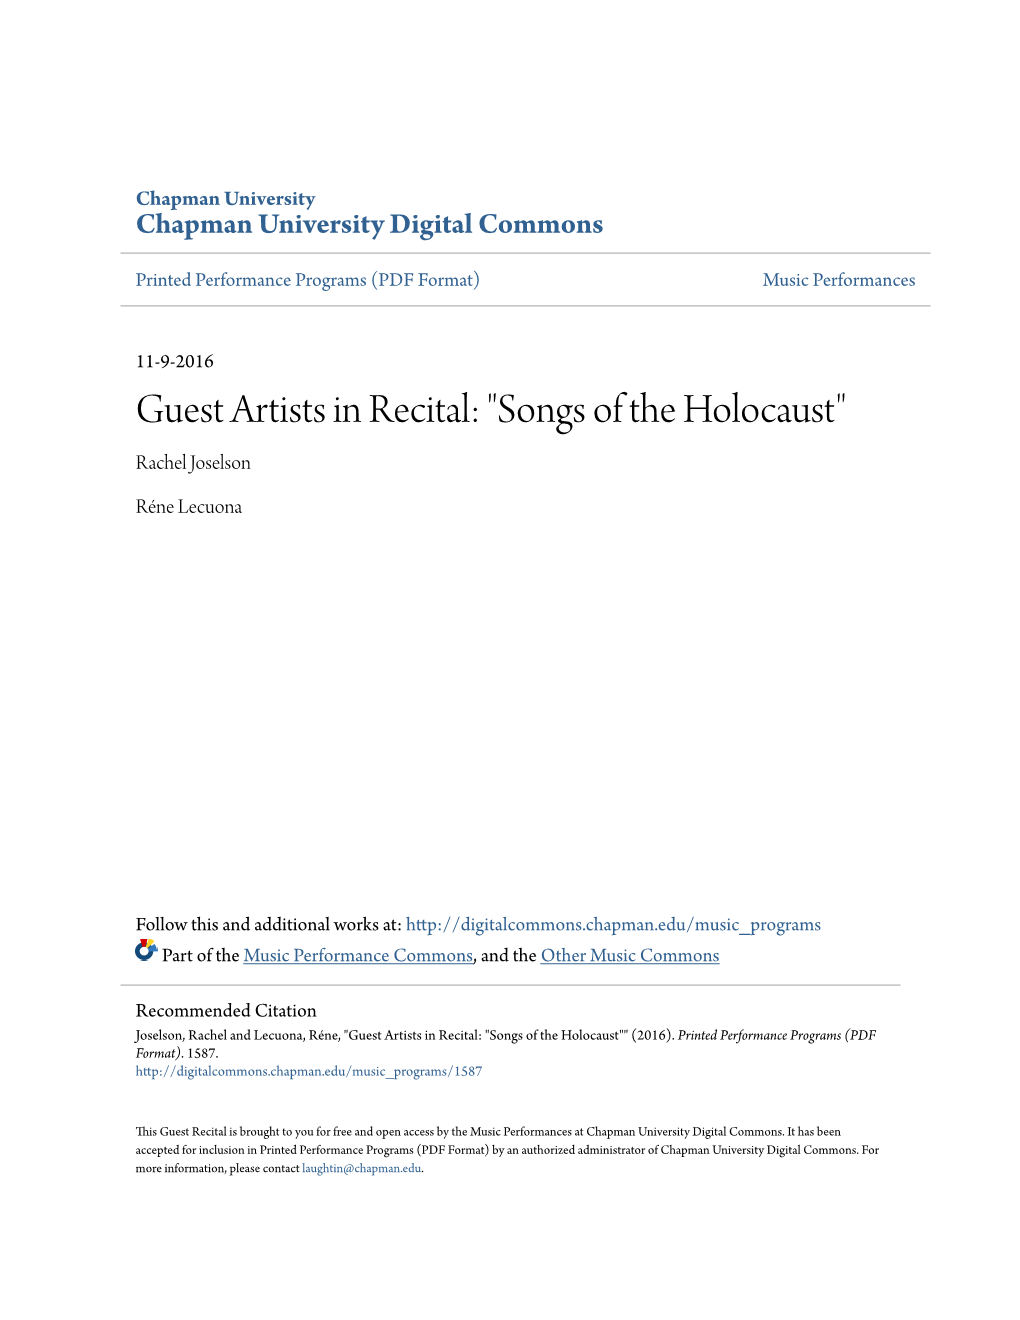 Songs of the Holocaust" Rachel Joselson